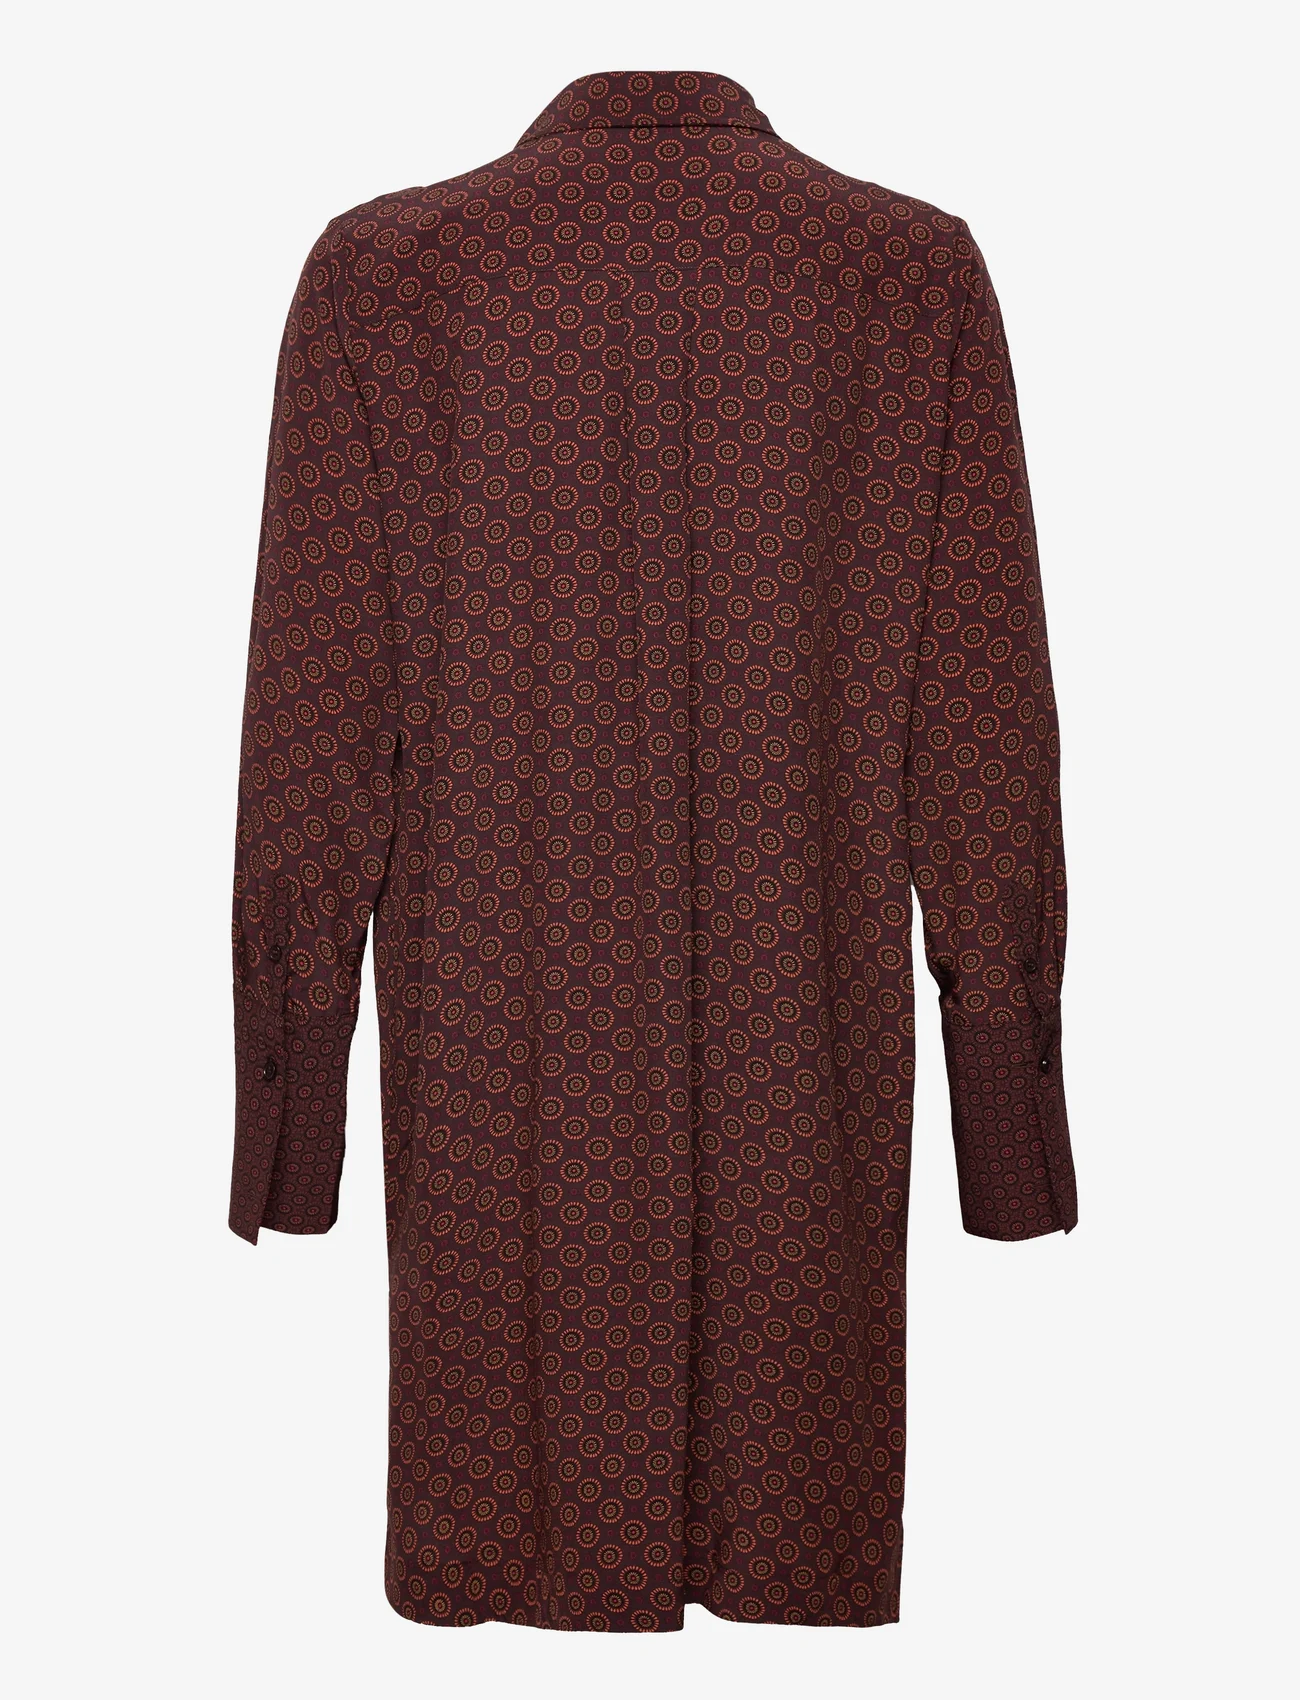 HUNKYDORY - Jamie Shirt Dress - skjortekjoler - chocolate brown aop - 1